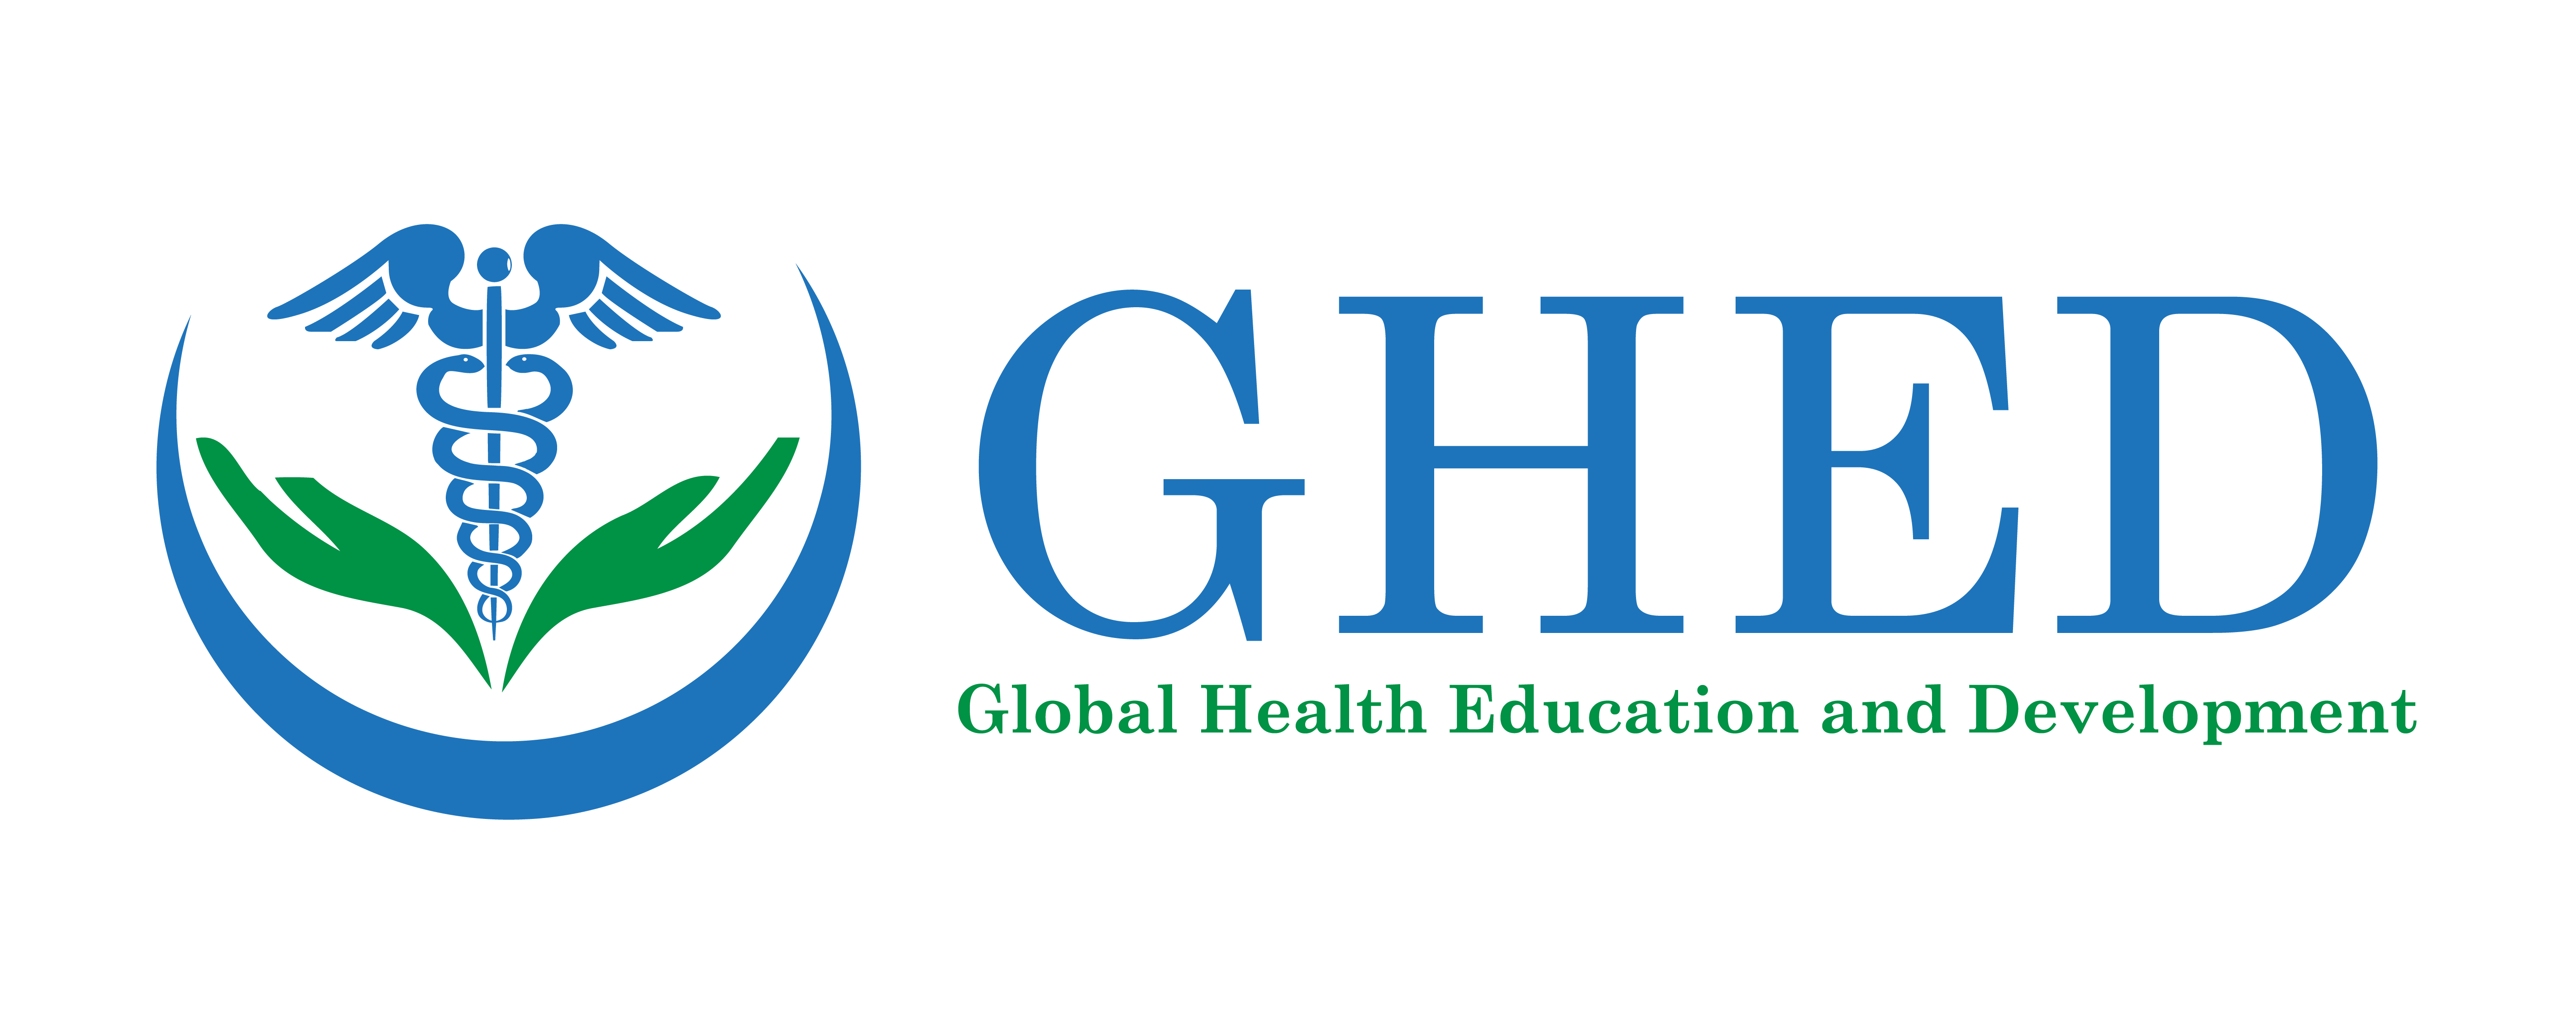 Global Health Education and Development logo